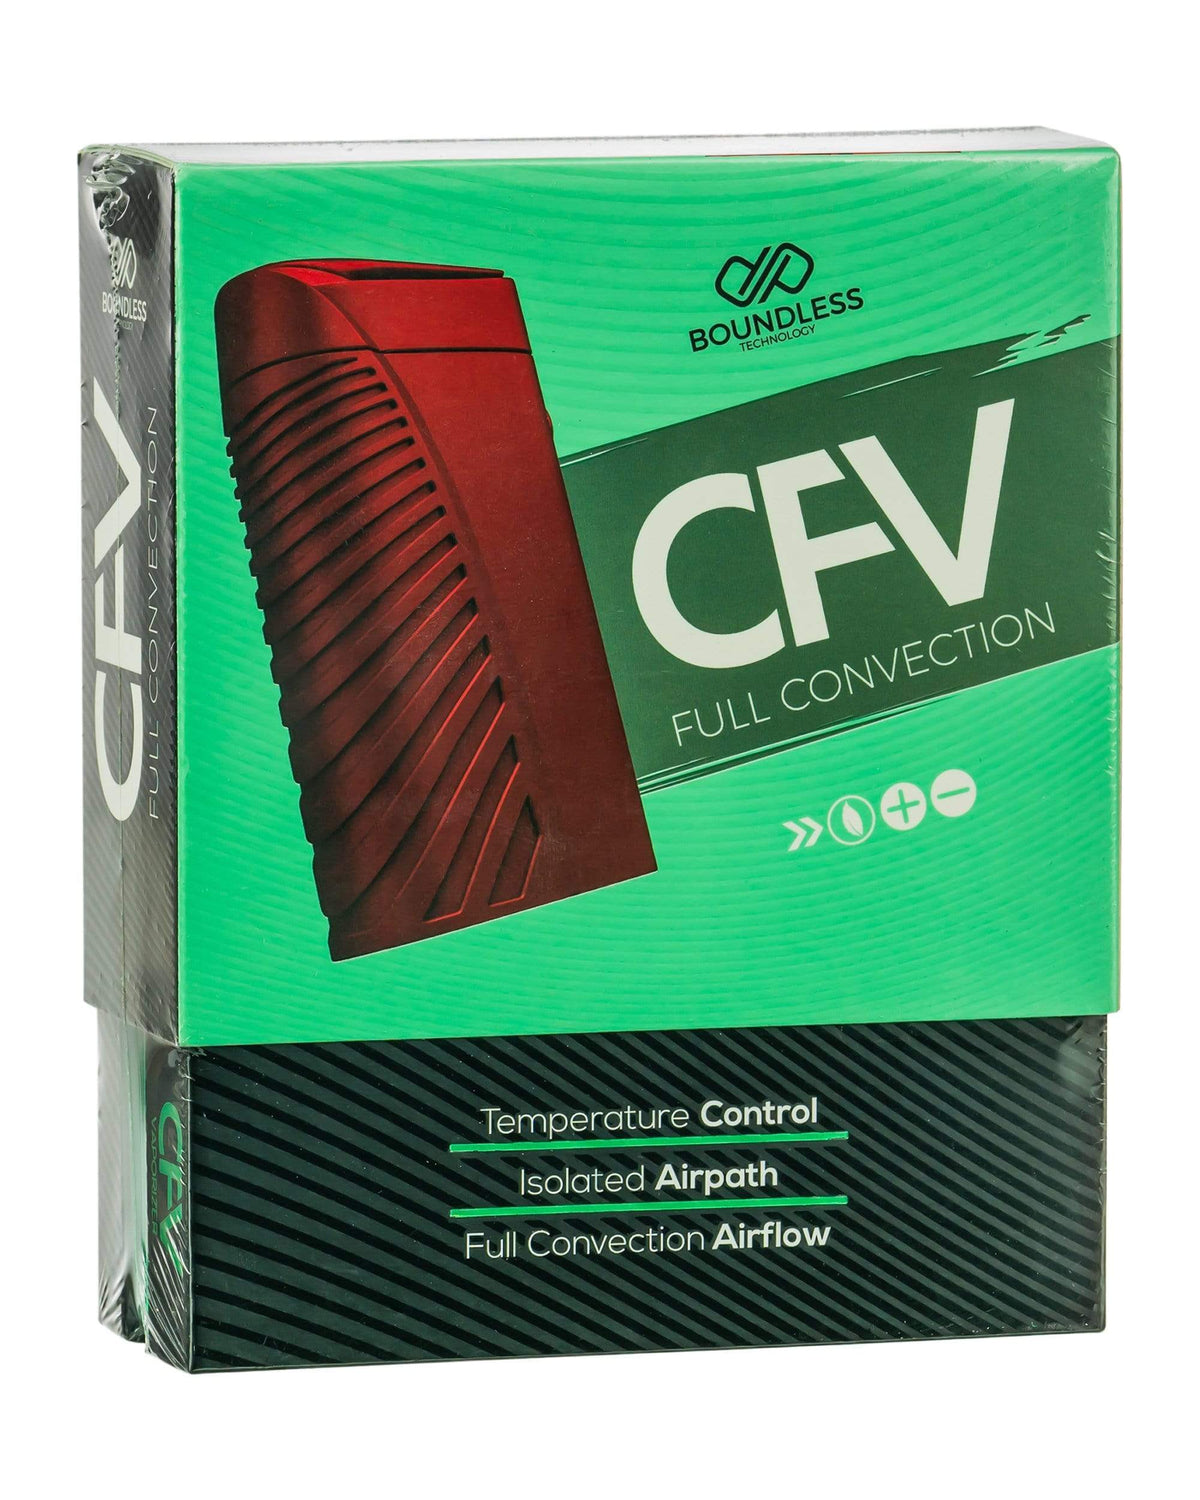 Boundless CFV Vaporizer Packaging